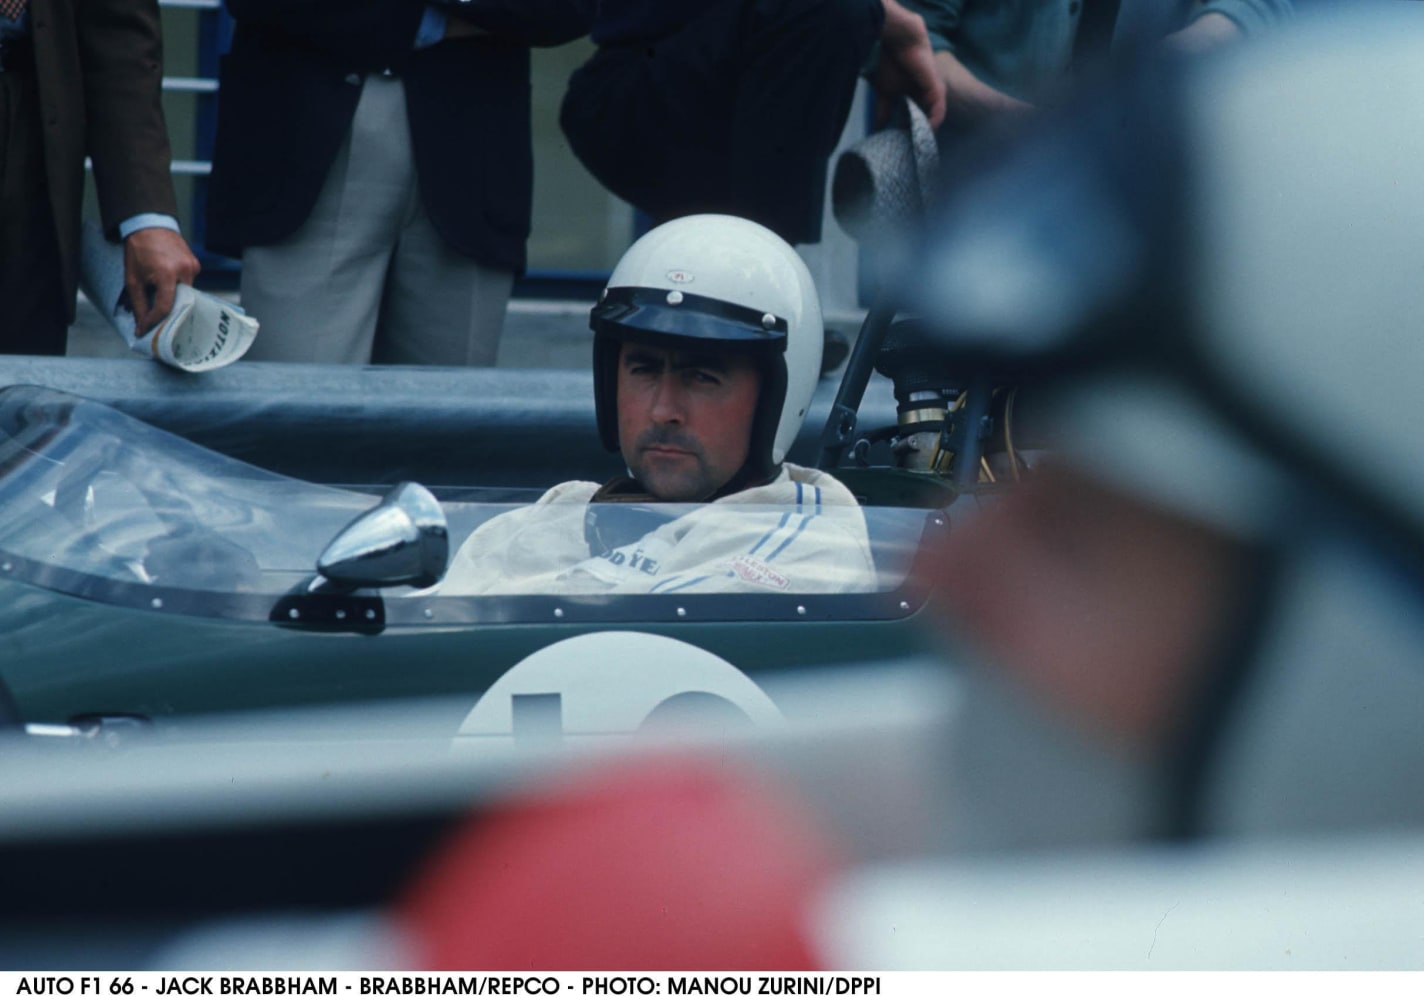 Brabham Automotive: The story behind the logo - Drive